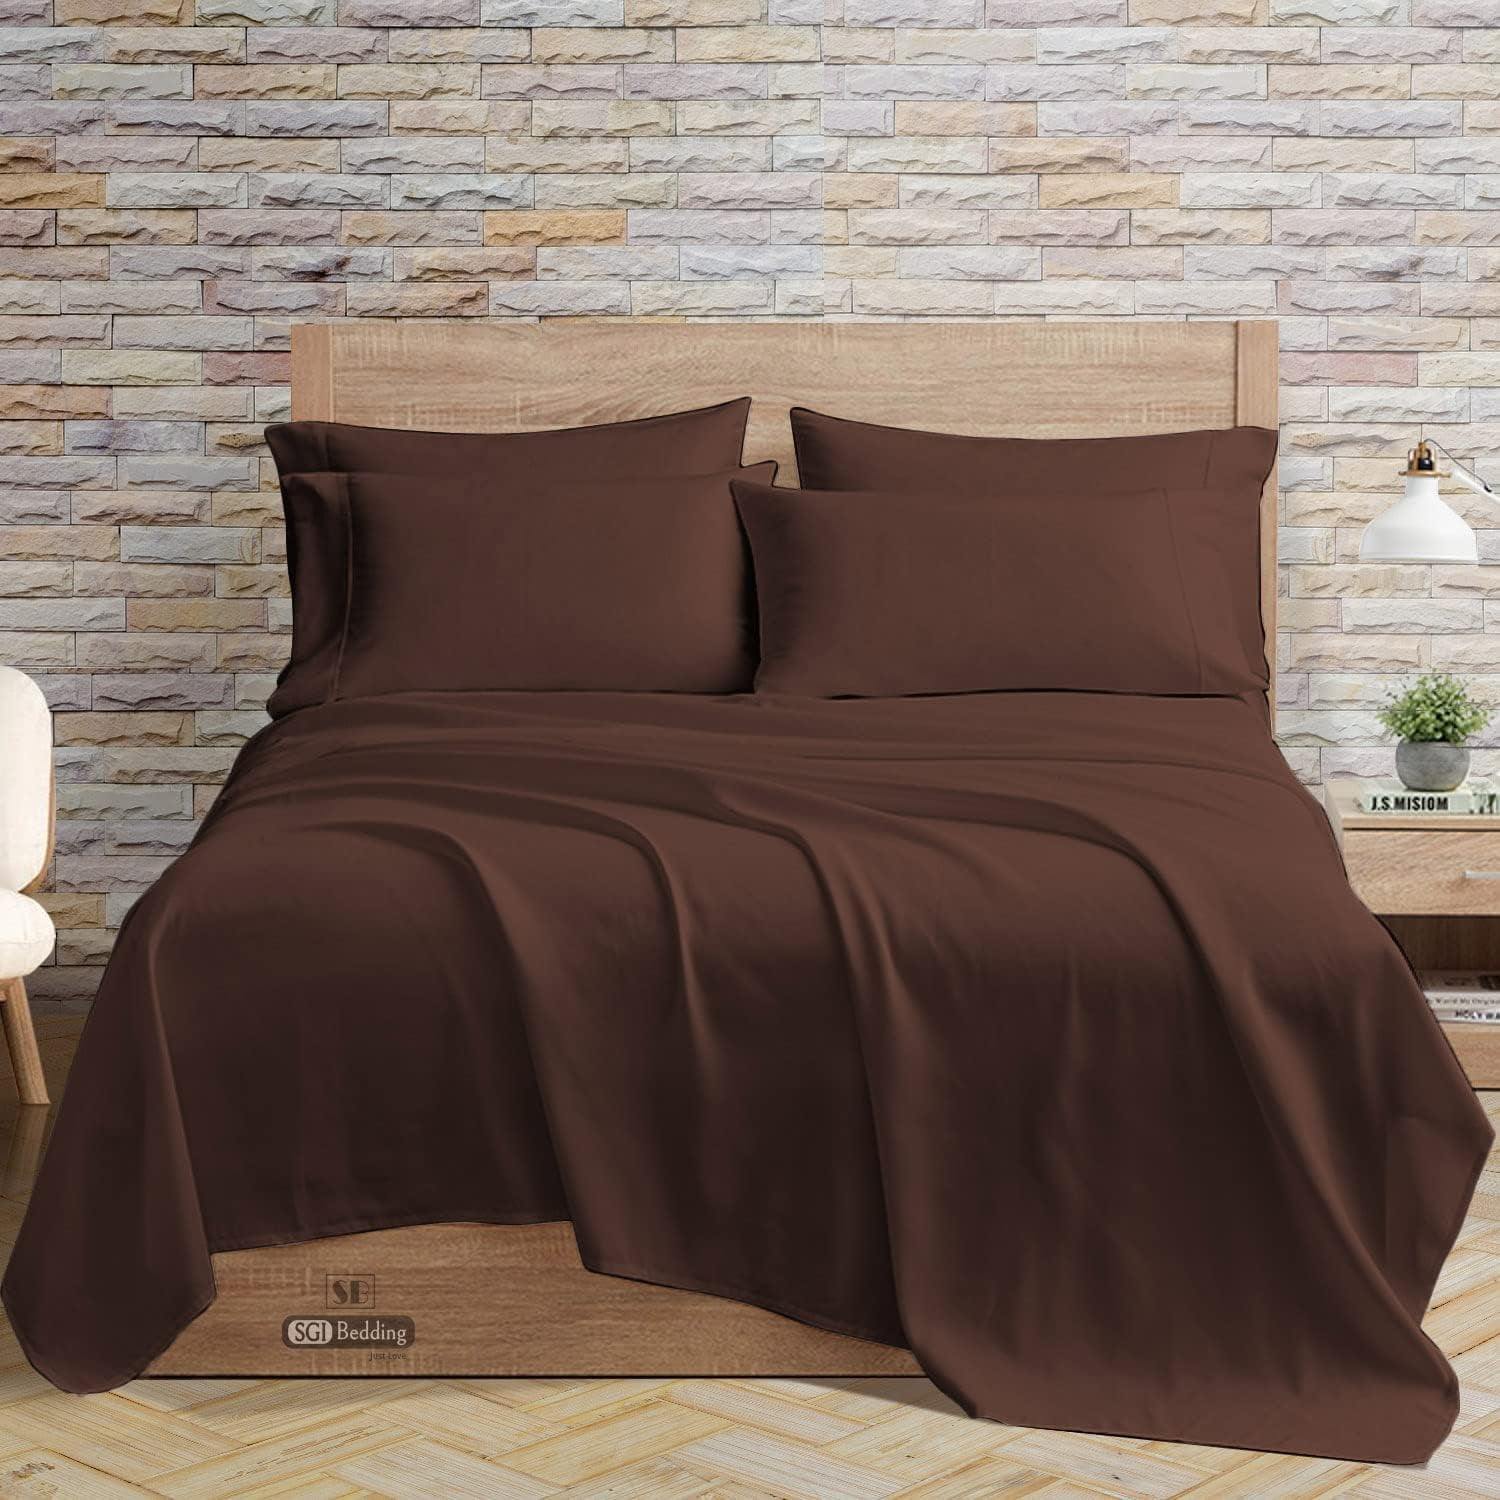 SGI 400 TC 100% Egyptian Cotton Bed Sheets, Luxurious Soft for Premium ...